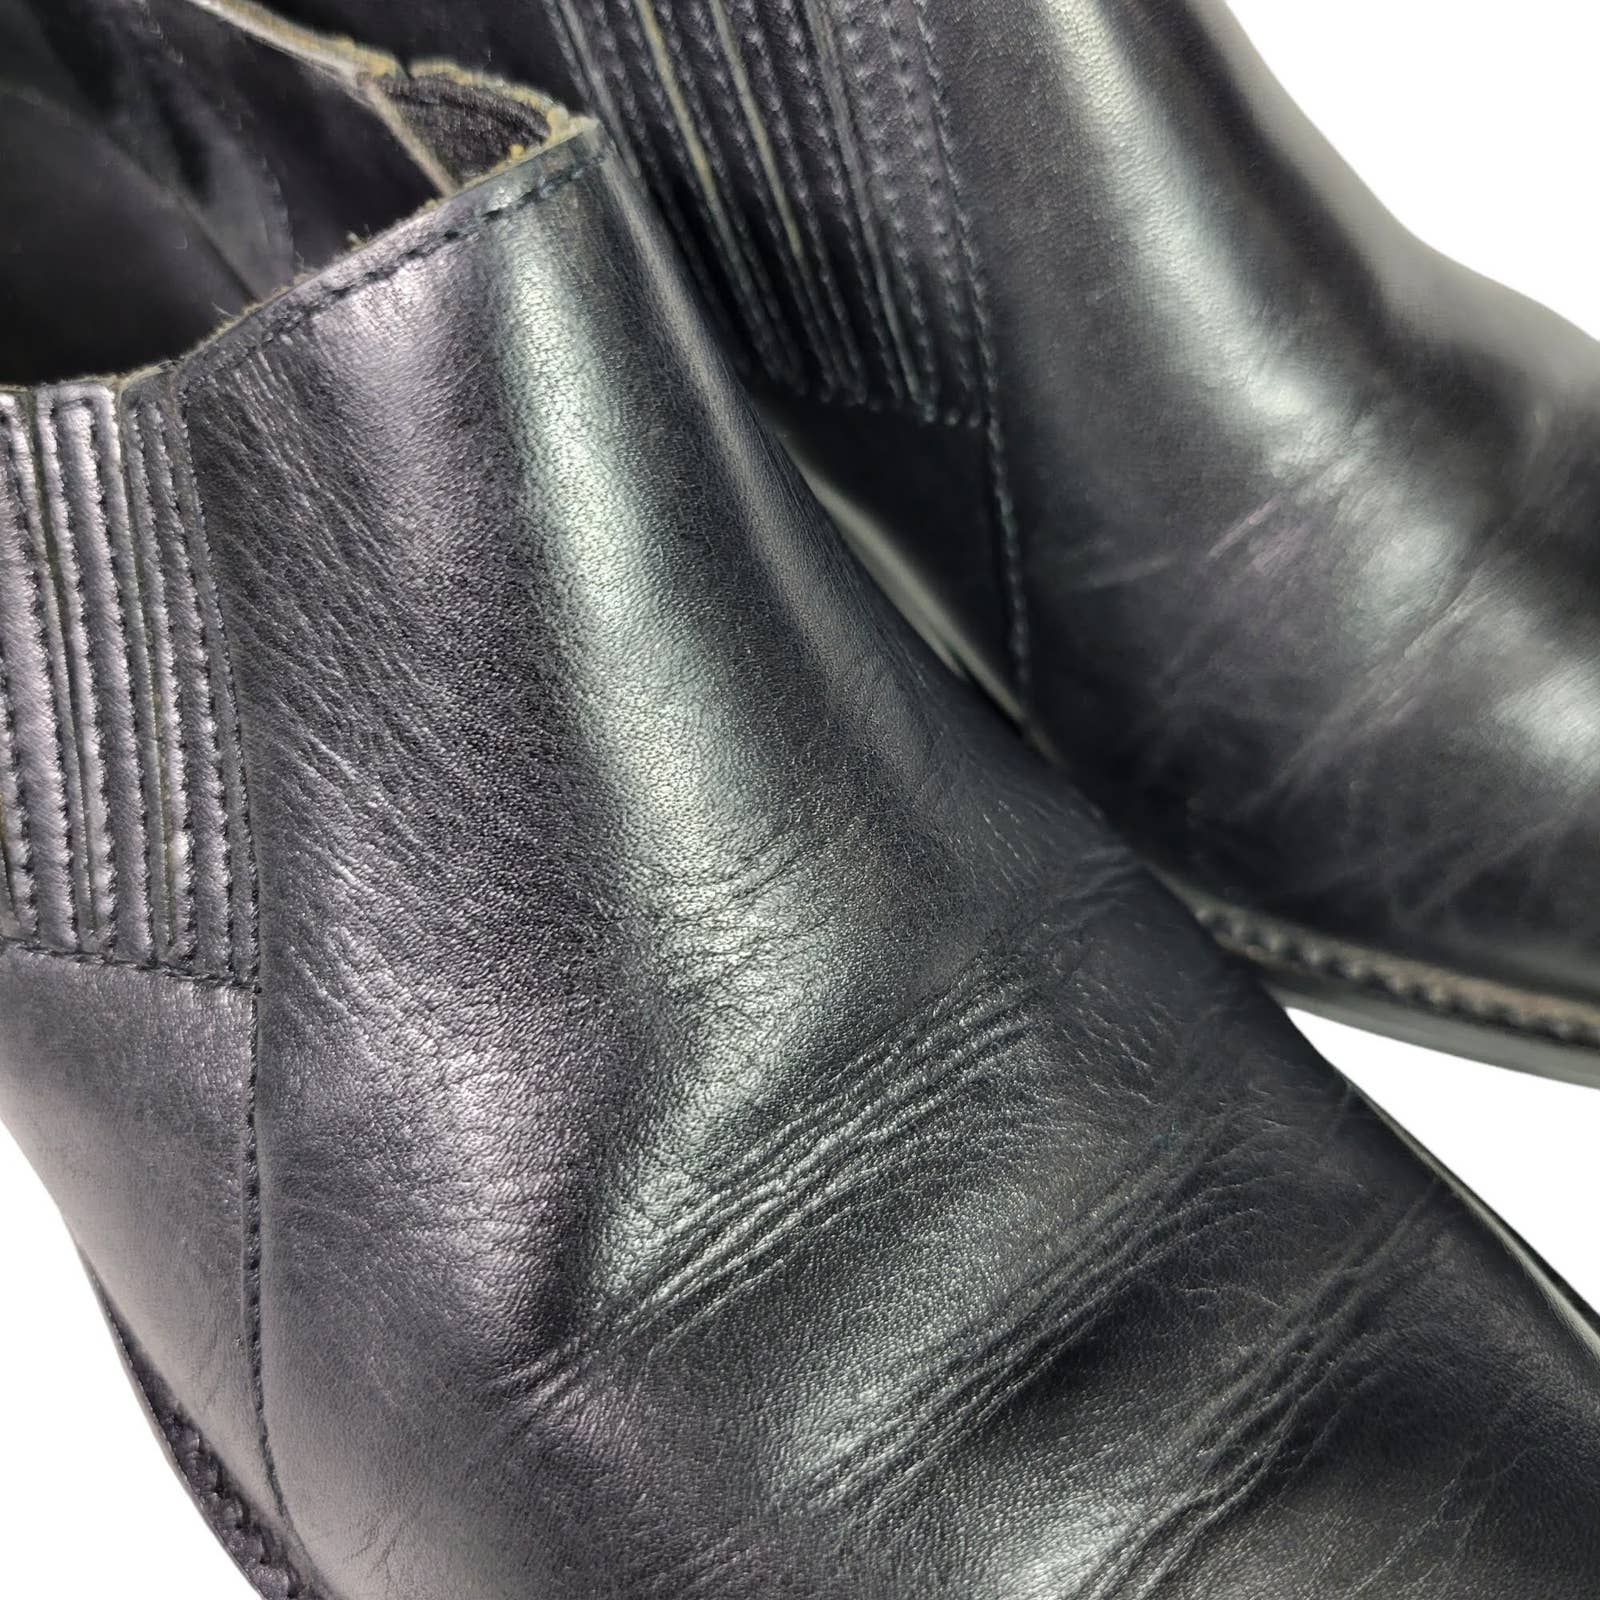 Nicole Oxford Flats Black Leather Cowboy Western Almond Toe Shoe Shooties Size 7